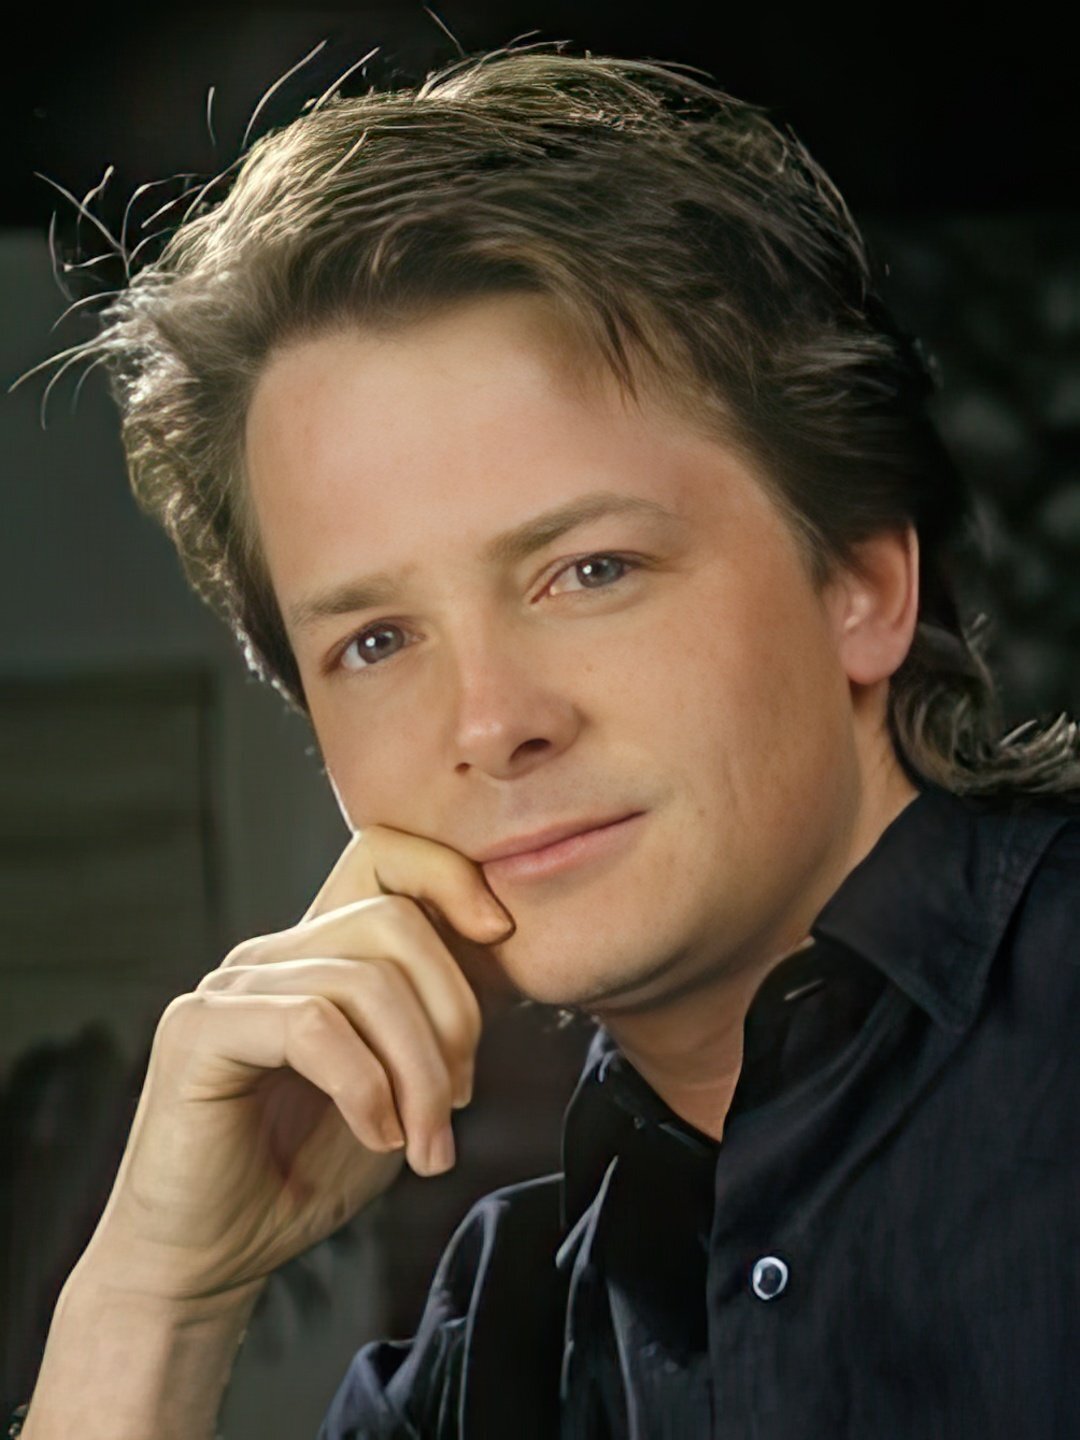 Michael J. Fox city of birth